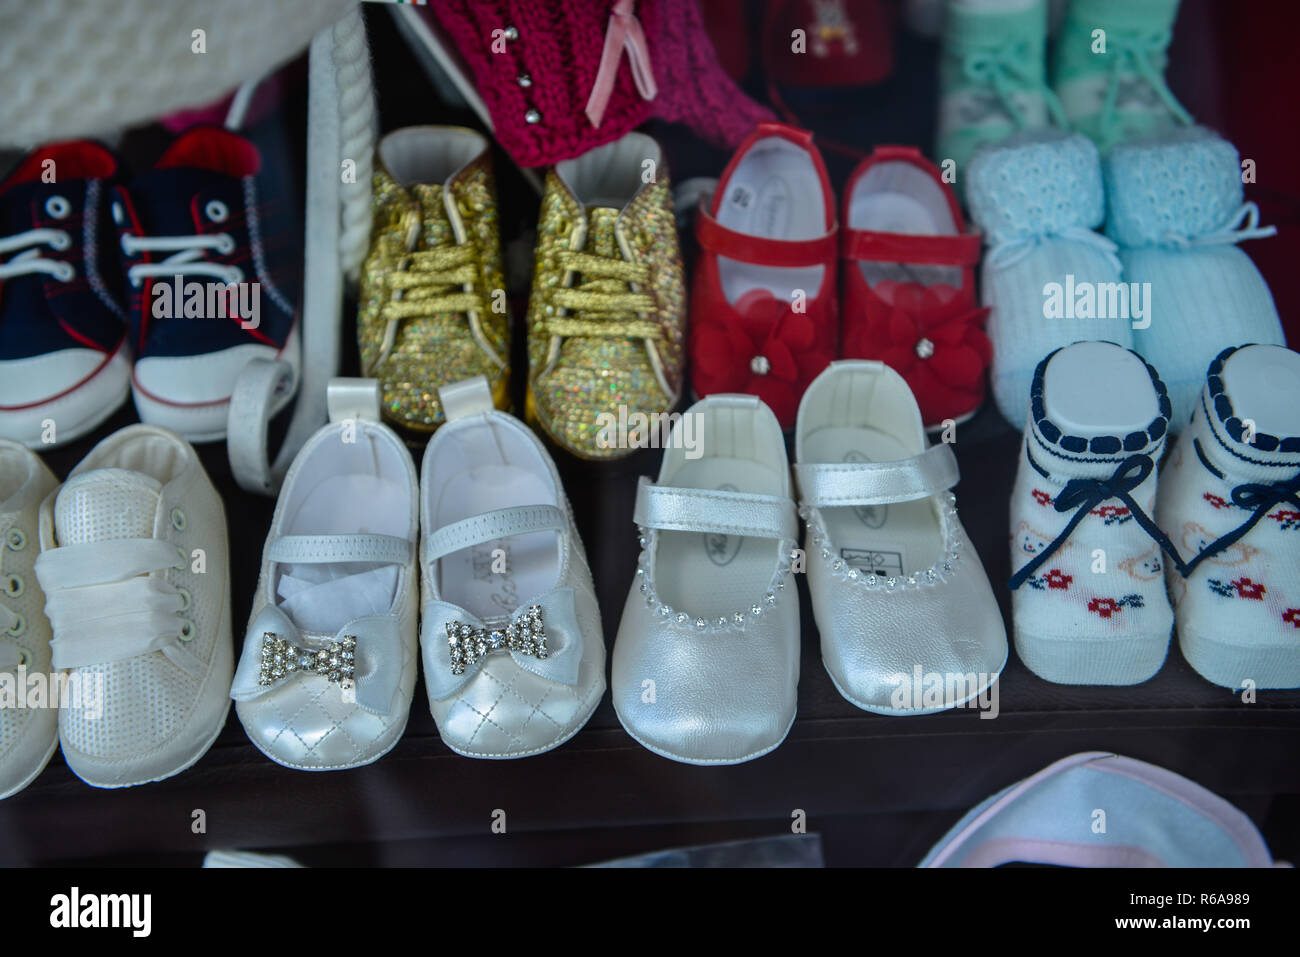 Los zapatos para niños, negocios, isla ischia, Italia, Geschaeft Kinderschuhe Insel, Ischia, Italien Foto de stock